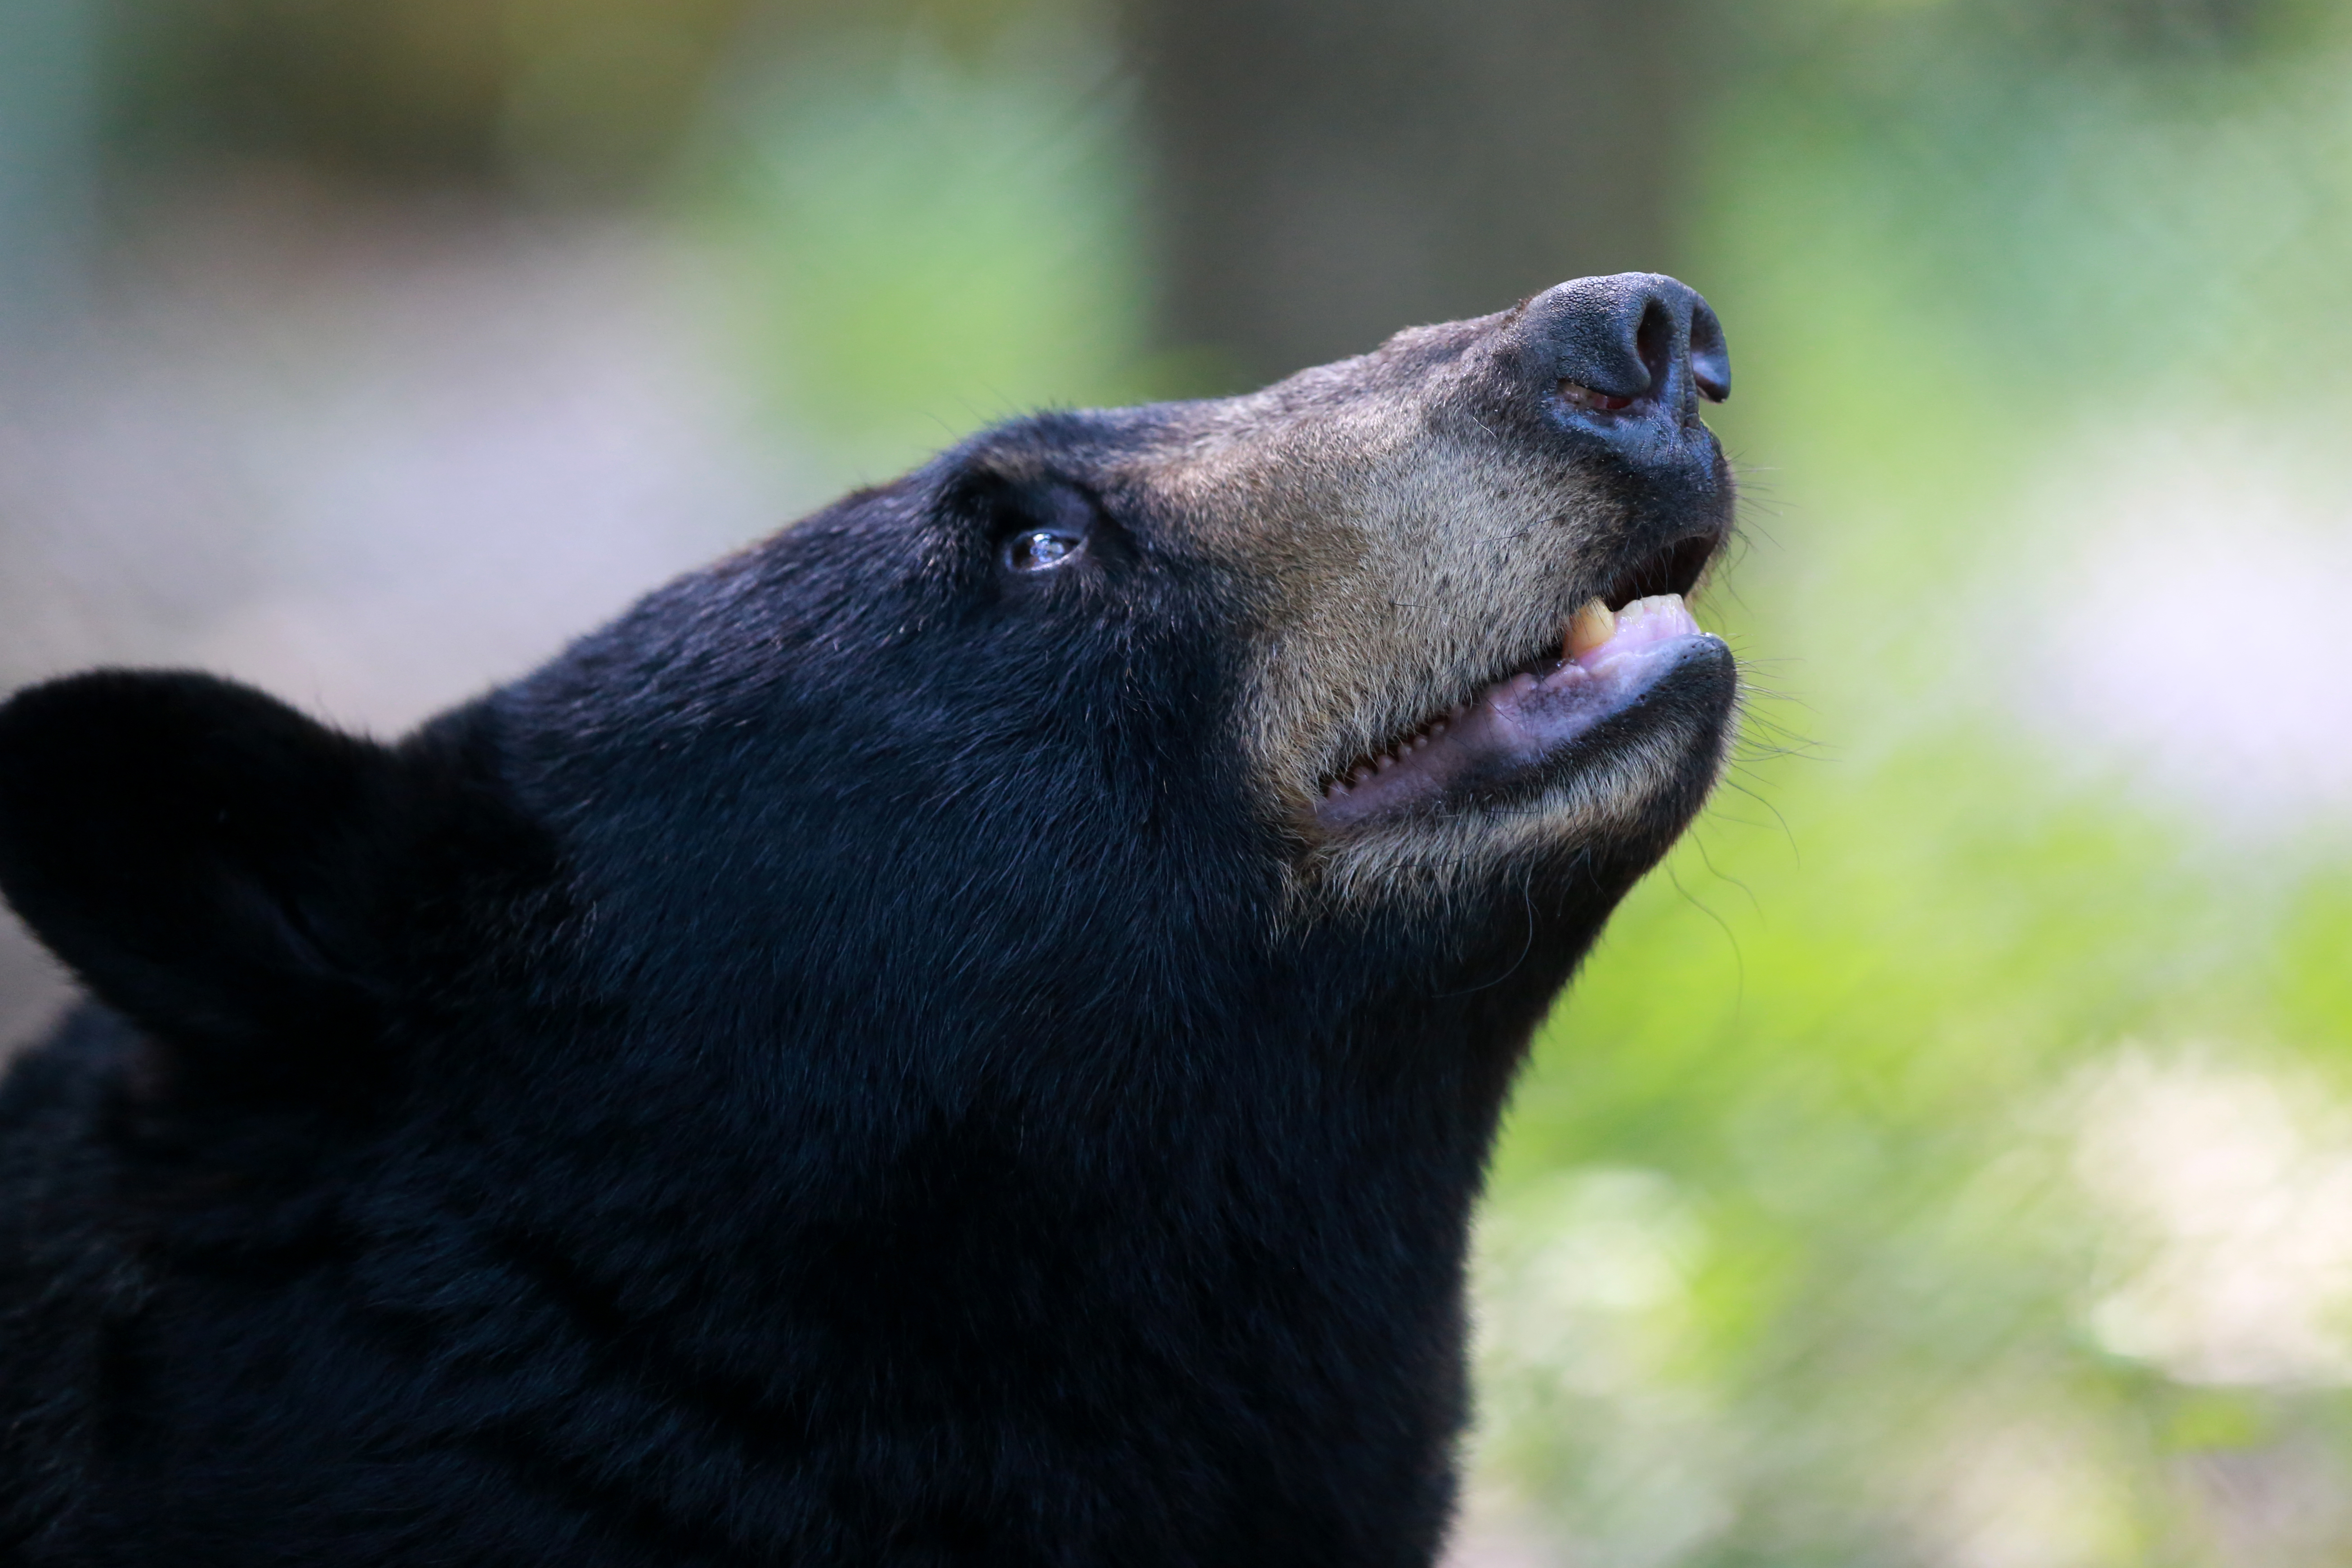 Close-Up Of Black Bear